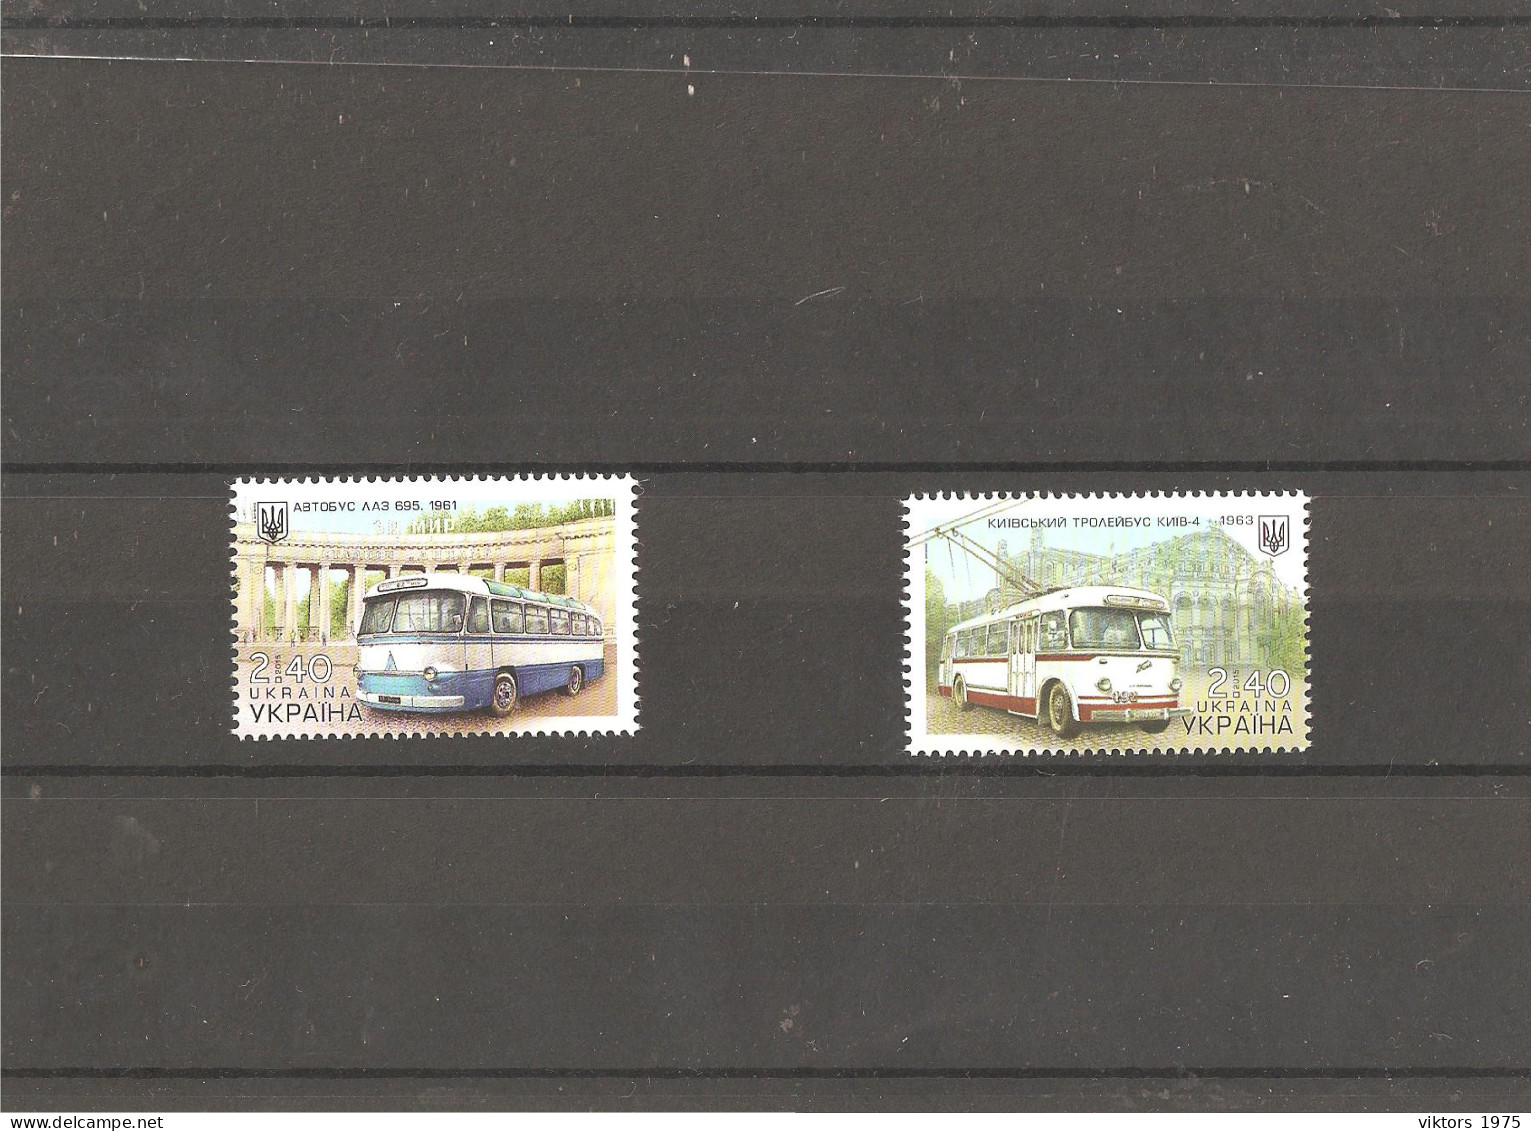 MNH Stamps Nr.1513-1514 In MICHEL Catalog - Ukraine